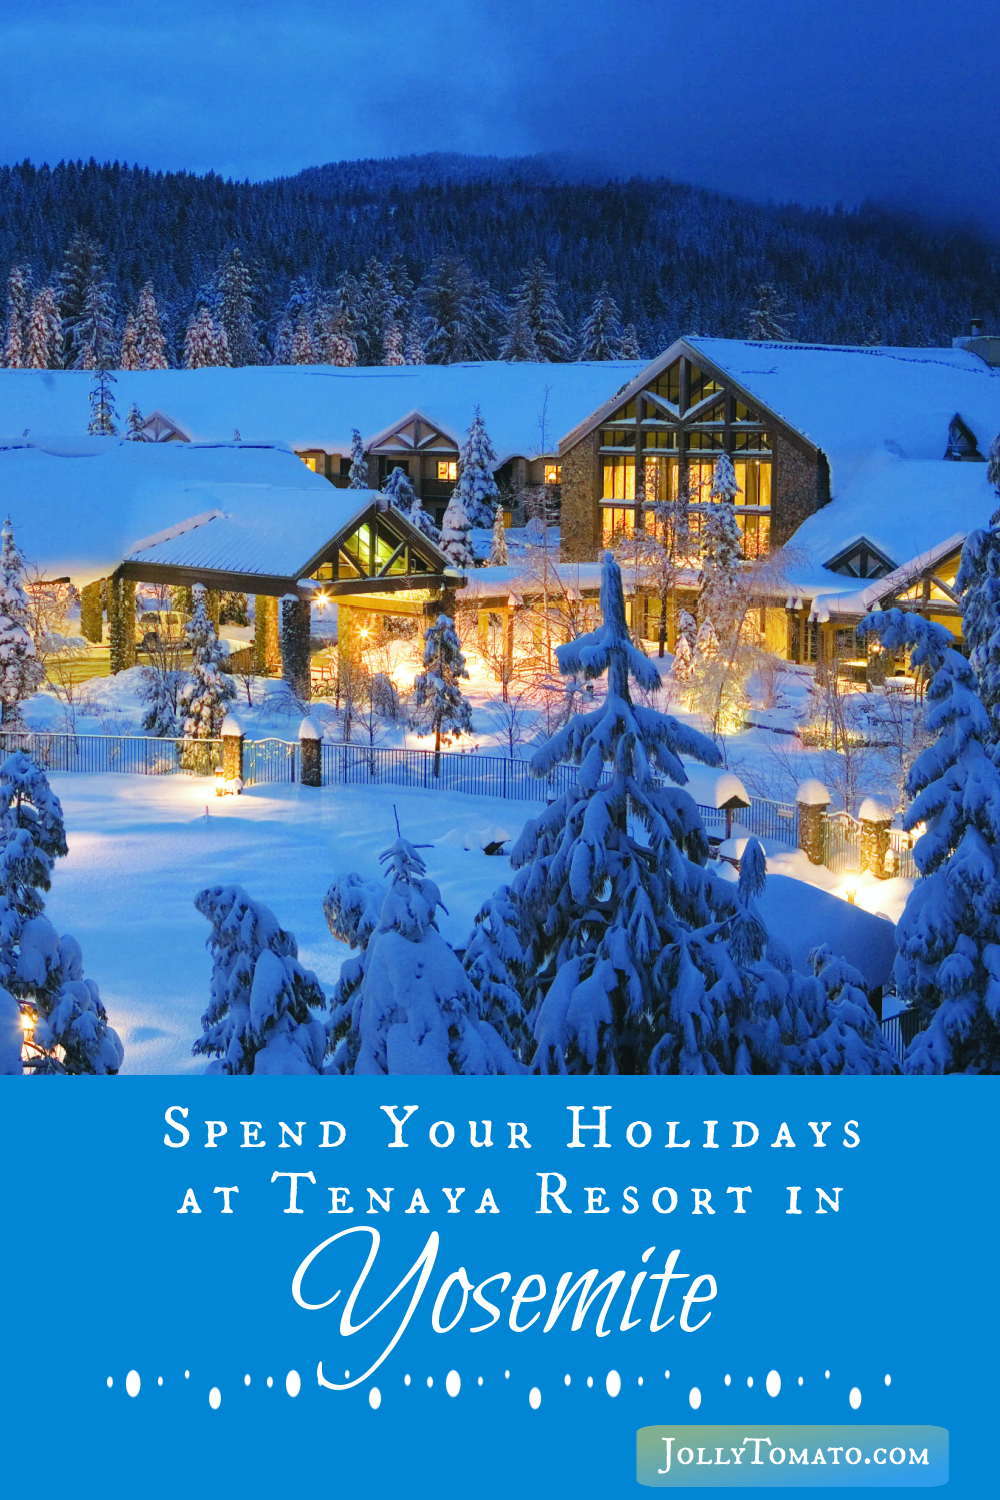 Spend your holidays at Tenaya Resort in Yosemite pin.